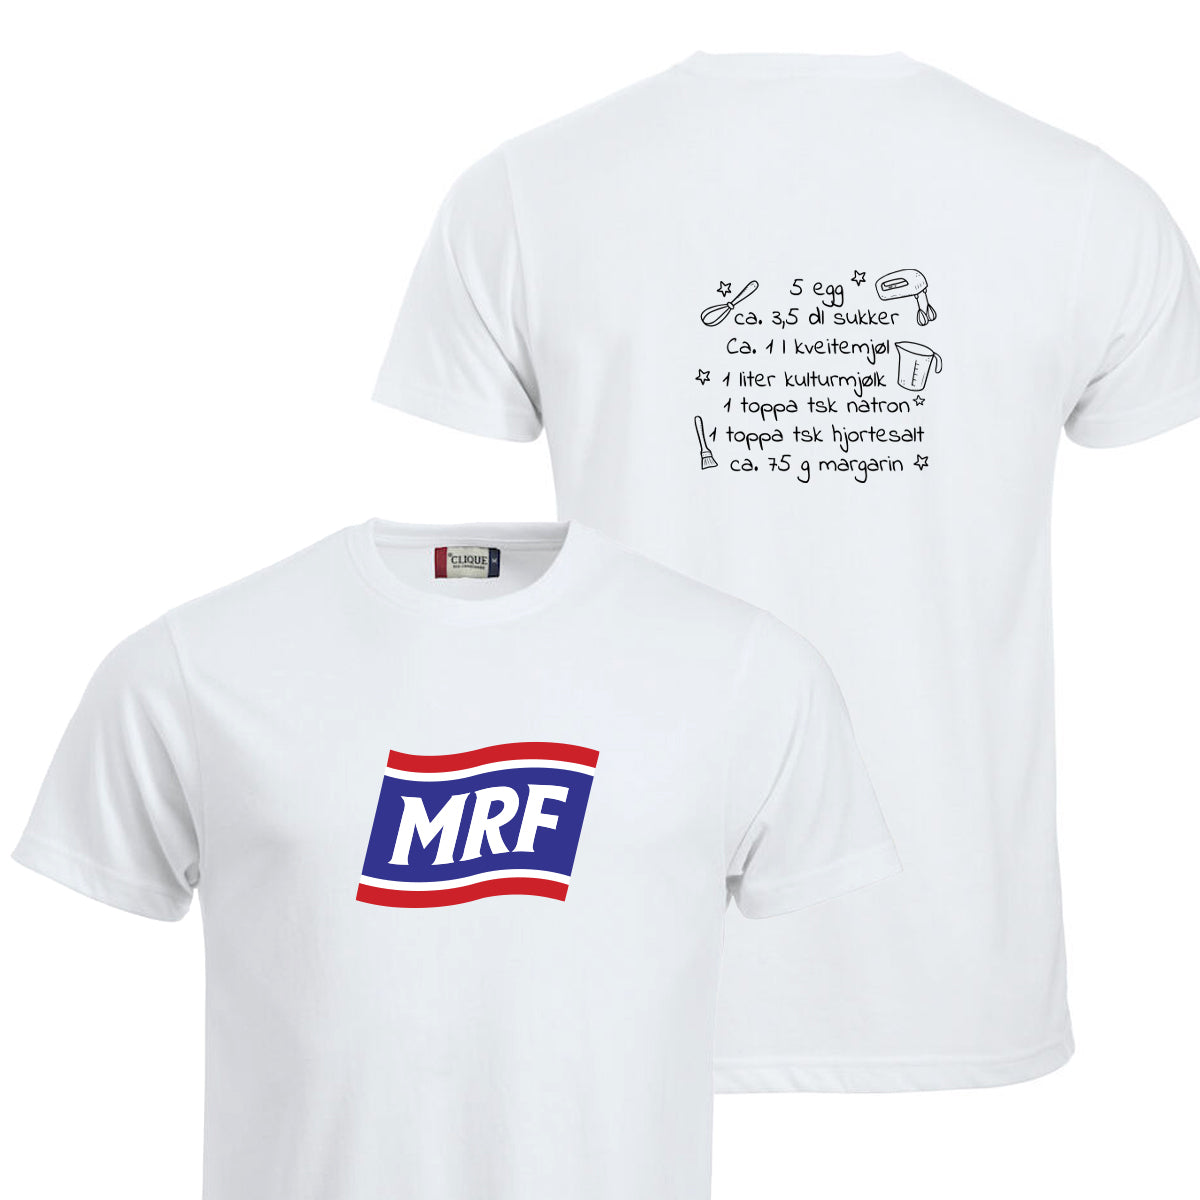 MRF Svelerøre - tskjorte